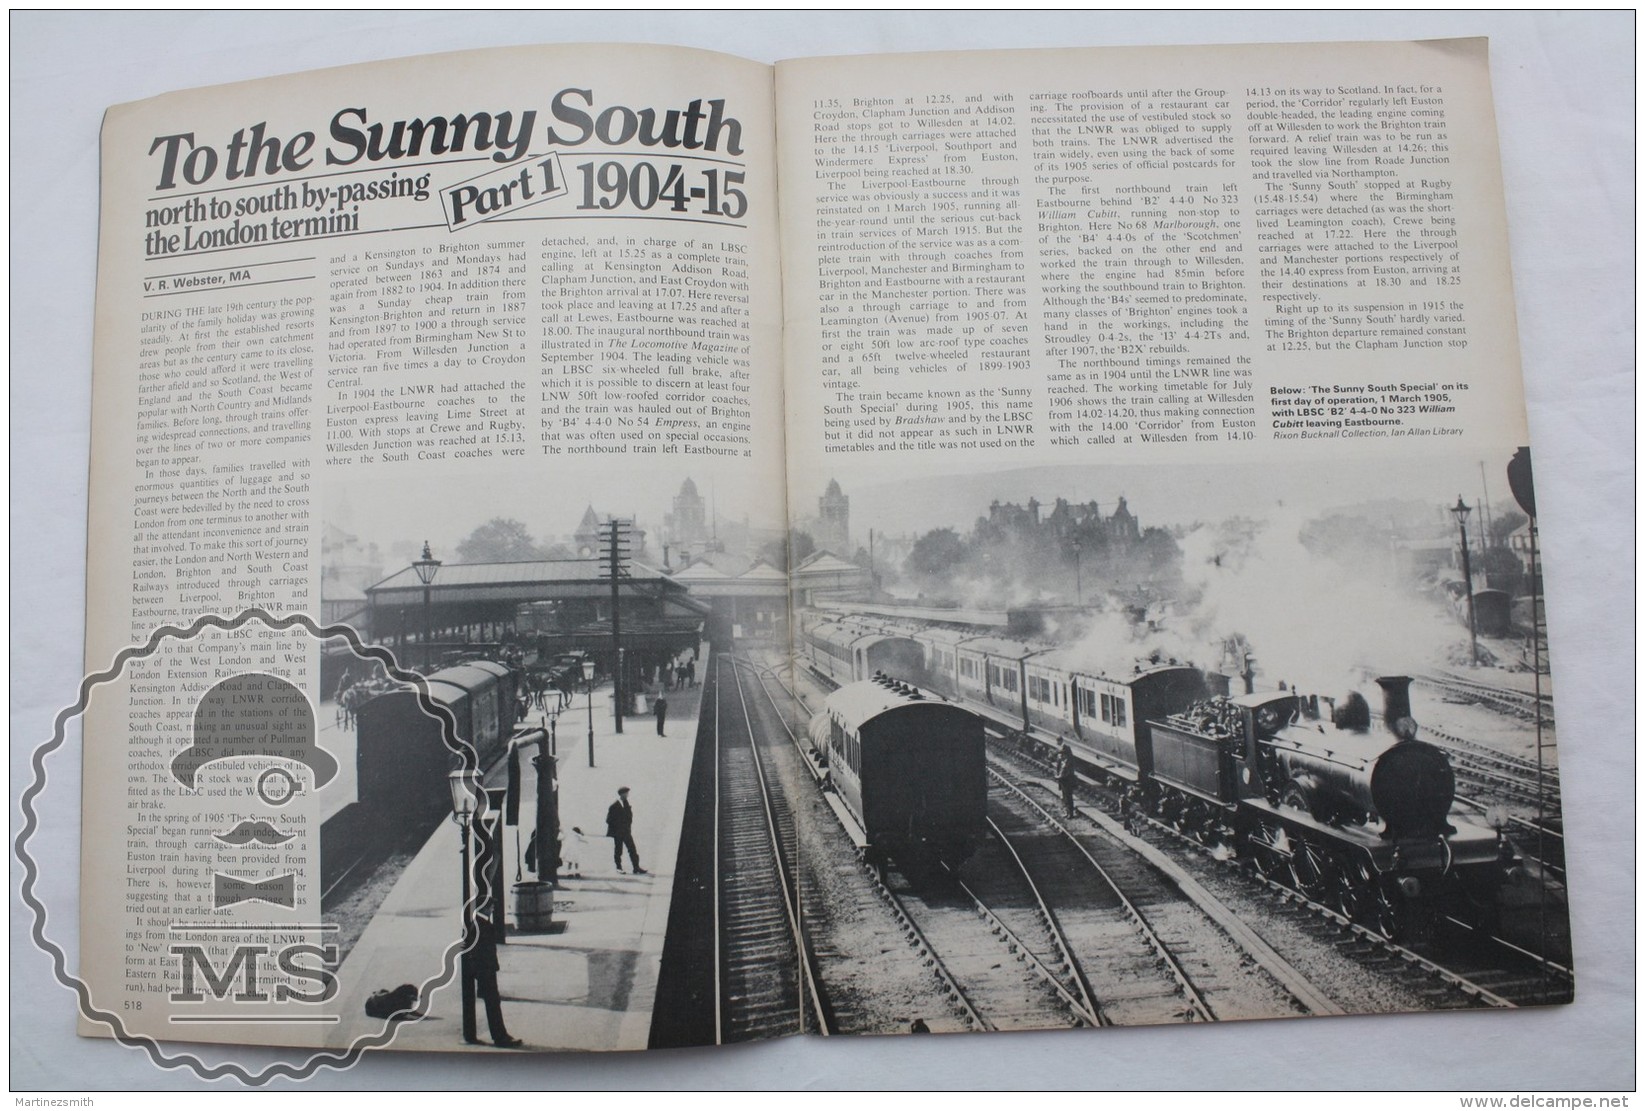 Railway World No 486 - Vintage Railway/ Railroad Train Magazine - 1980 - Eisenbahnverkehr